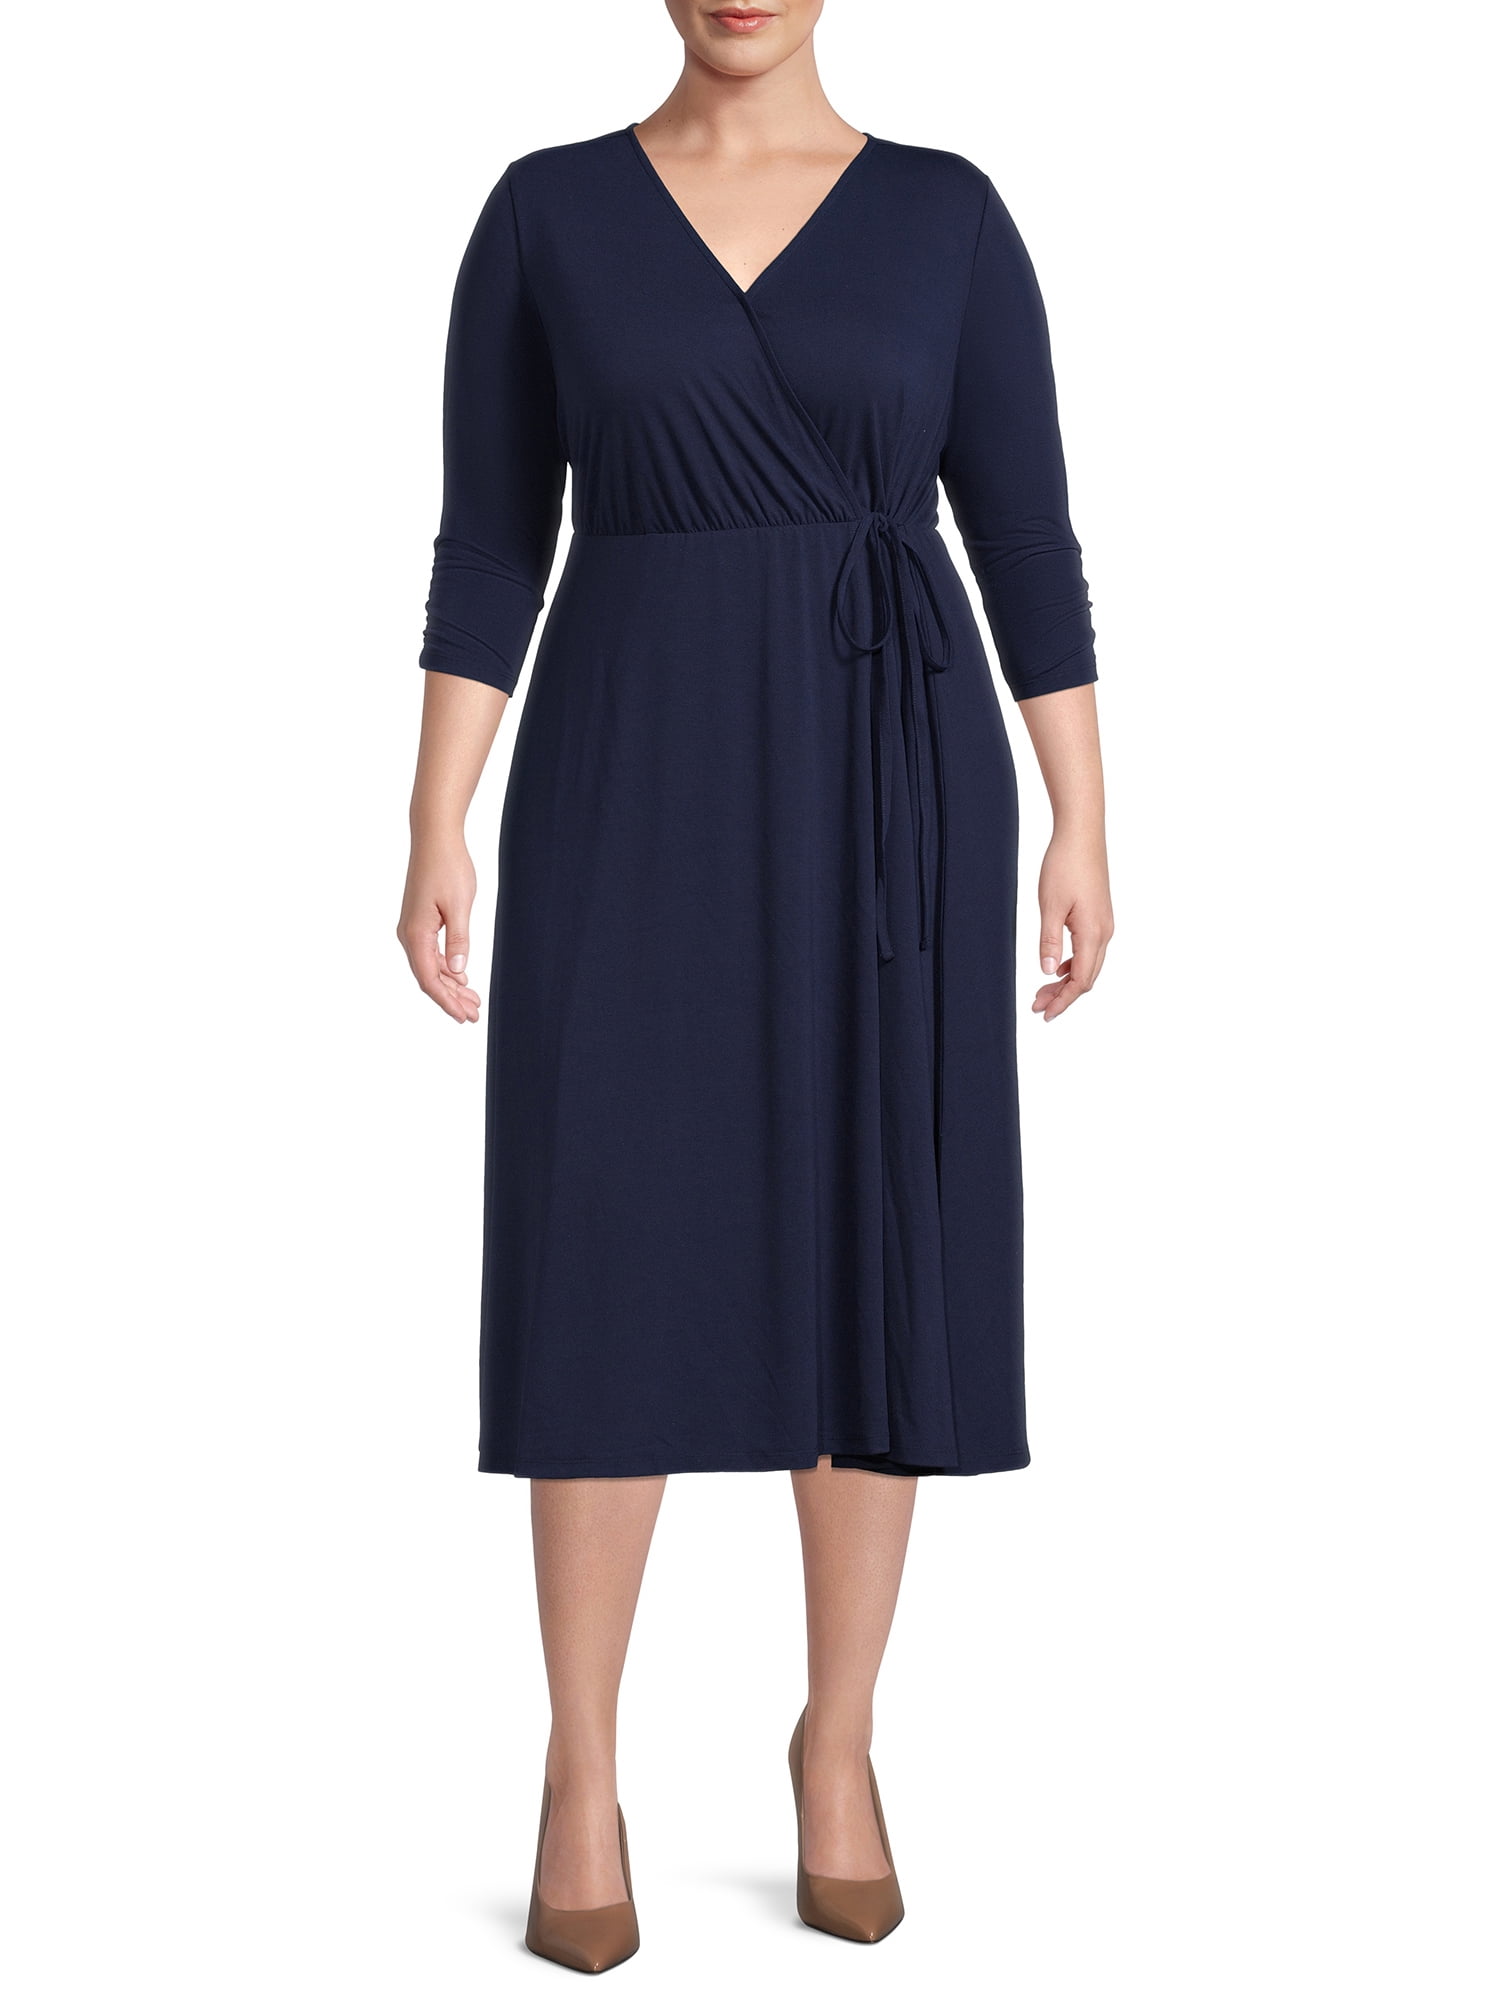 Terra & Sky Women's Plus Size Faux Wrap Dress - Walmart.com